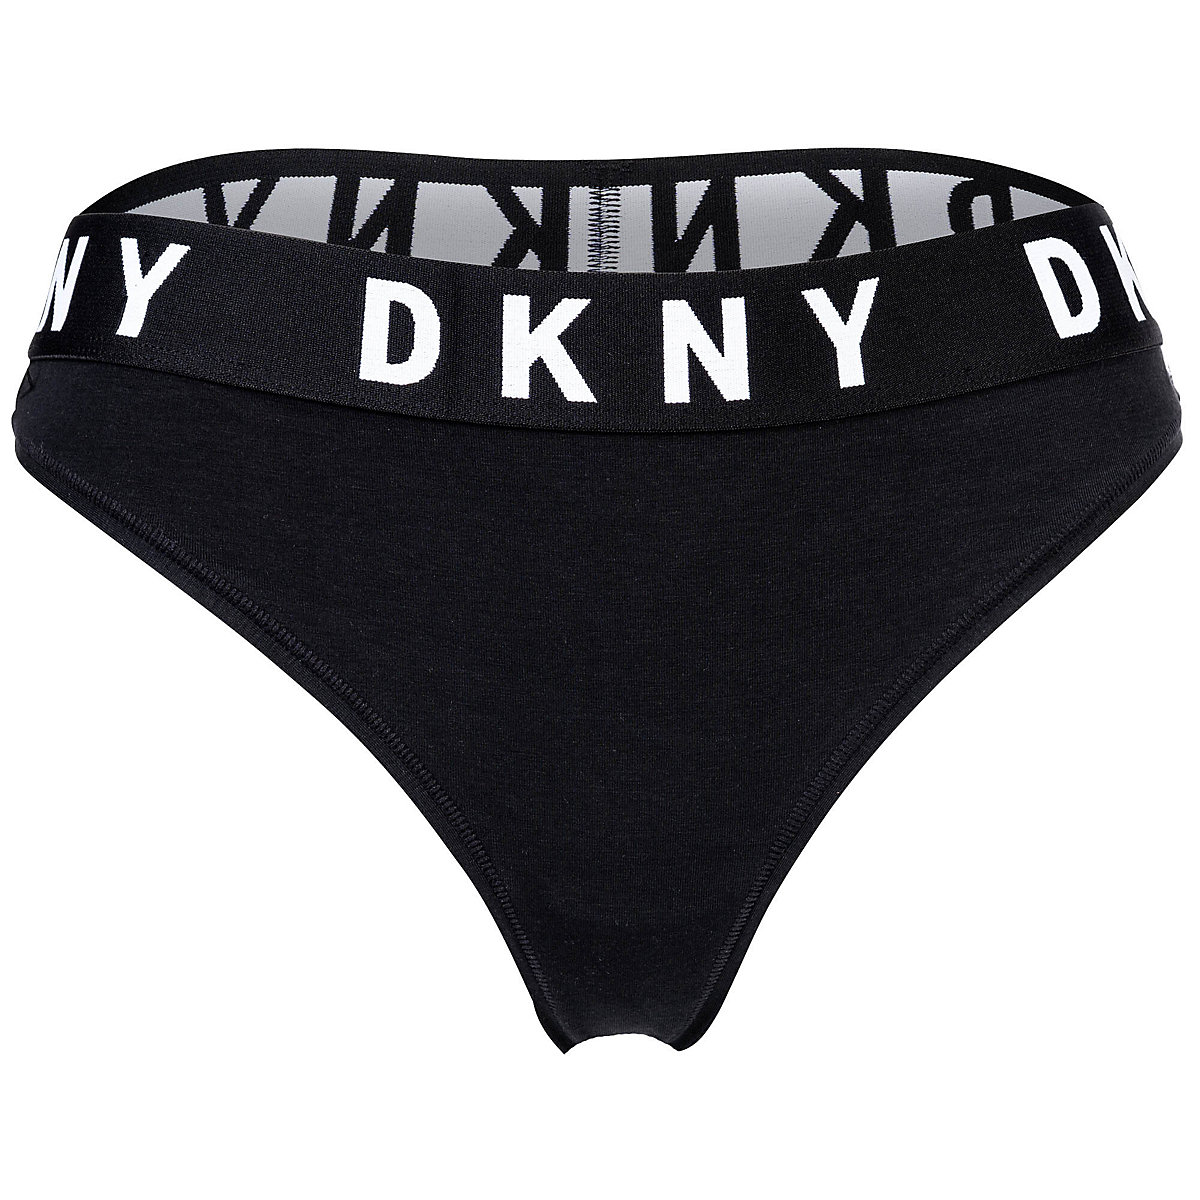 DKNY Damen String Tanga Cotton Modal Stretch Logobund einfarbig Strings schwarz